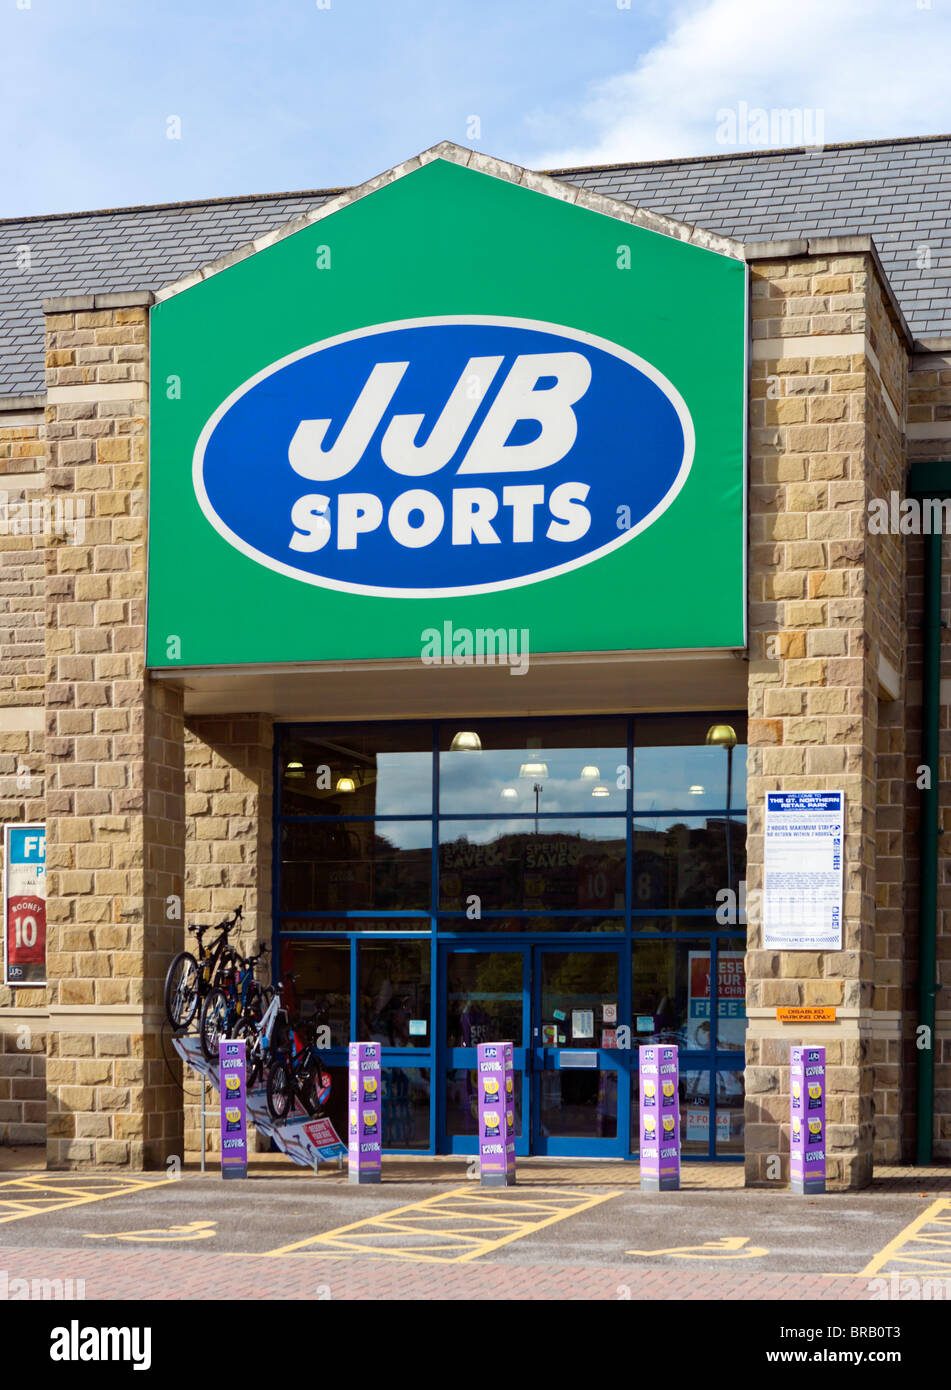 JJB Sports Superstore, Great Northern Retail Park, Leeds Road, Huddersfield, West Yorkshire, England, UK Banque D'Images